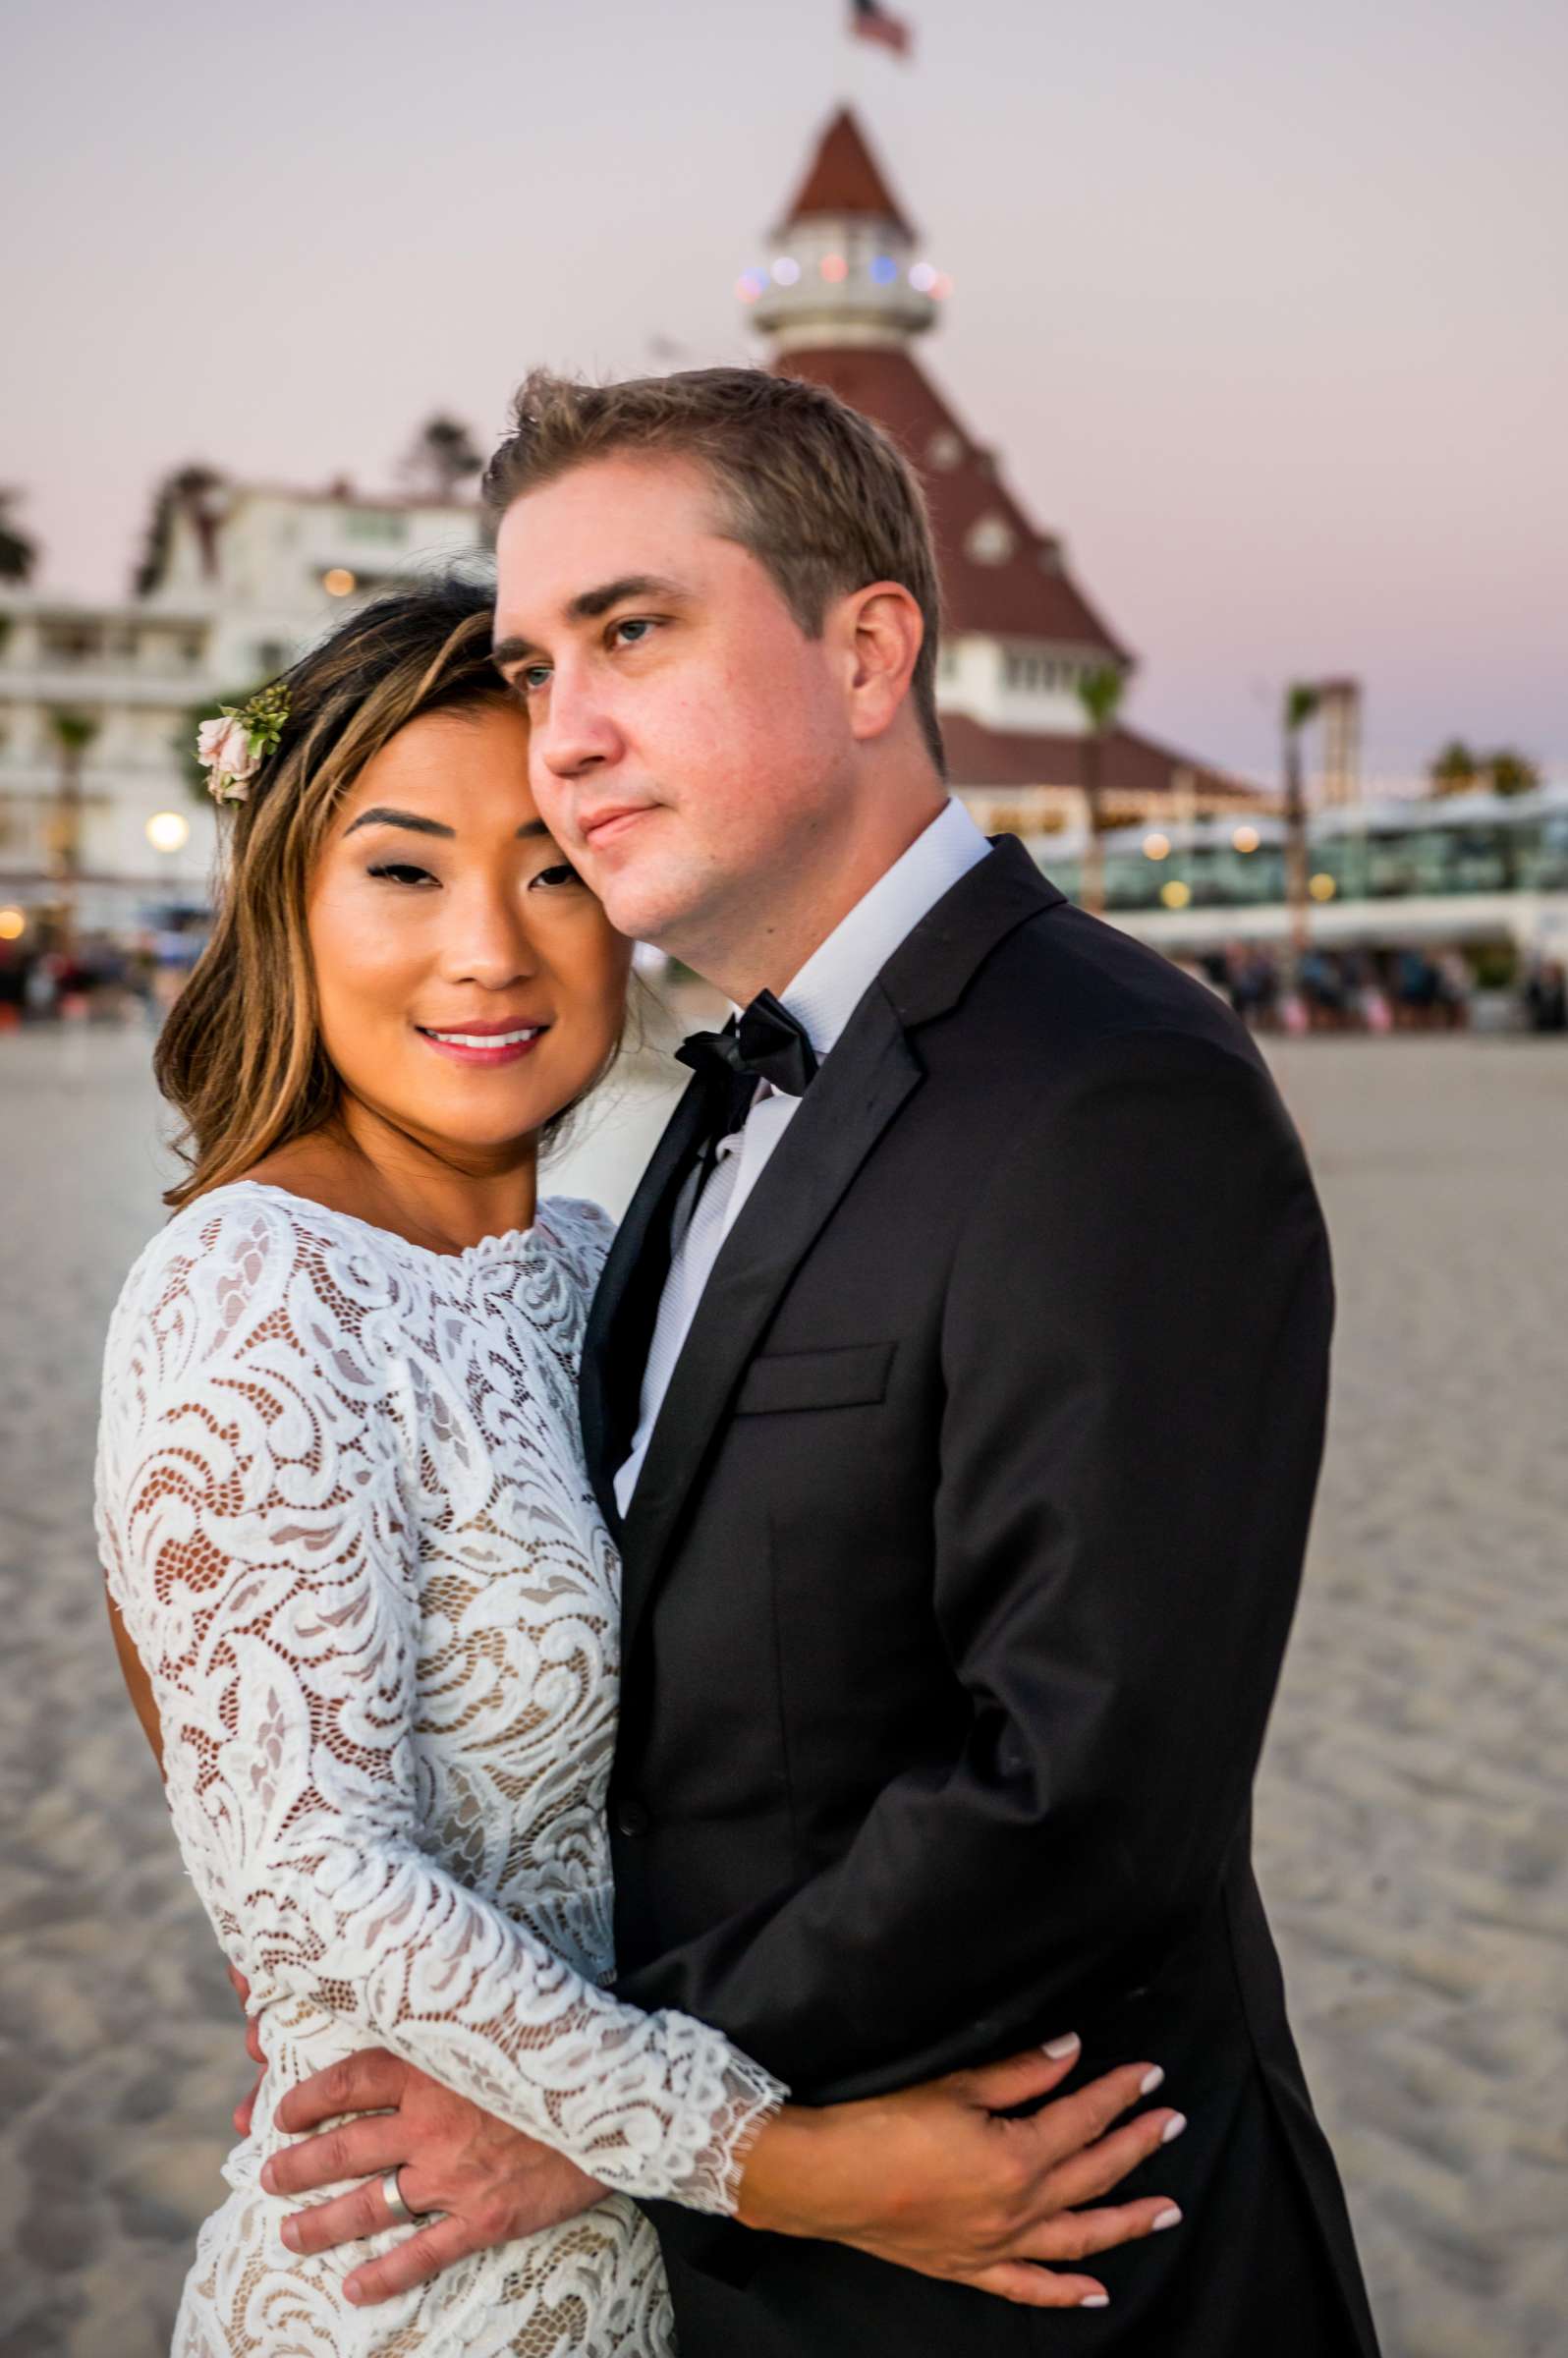 Hotel Del Coronado Wedding, Erica and Tim Wedding Photo #26 by True Photography